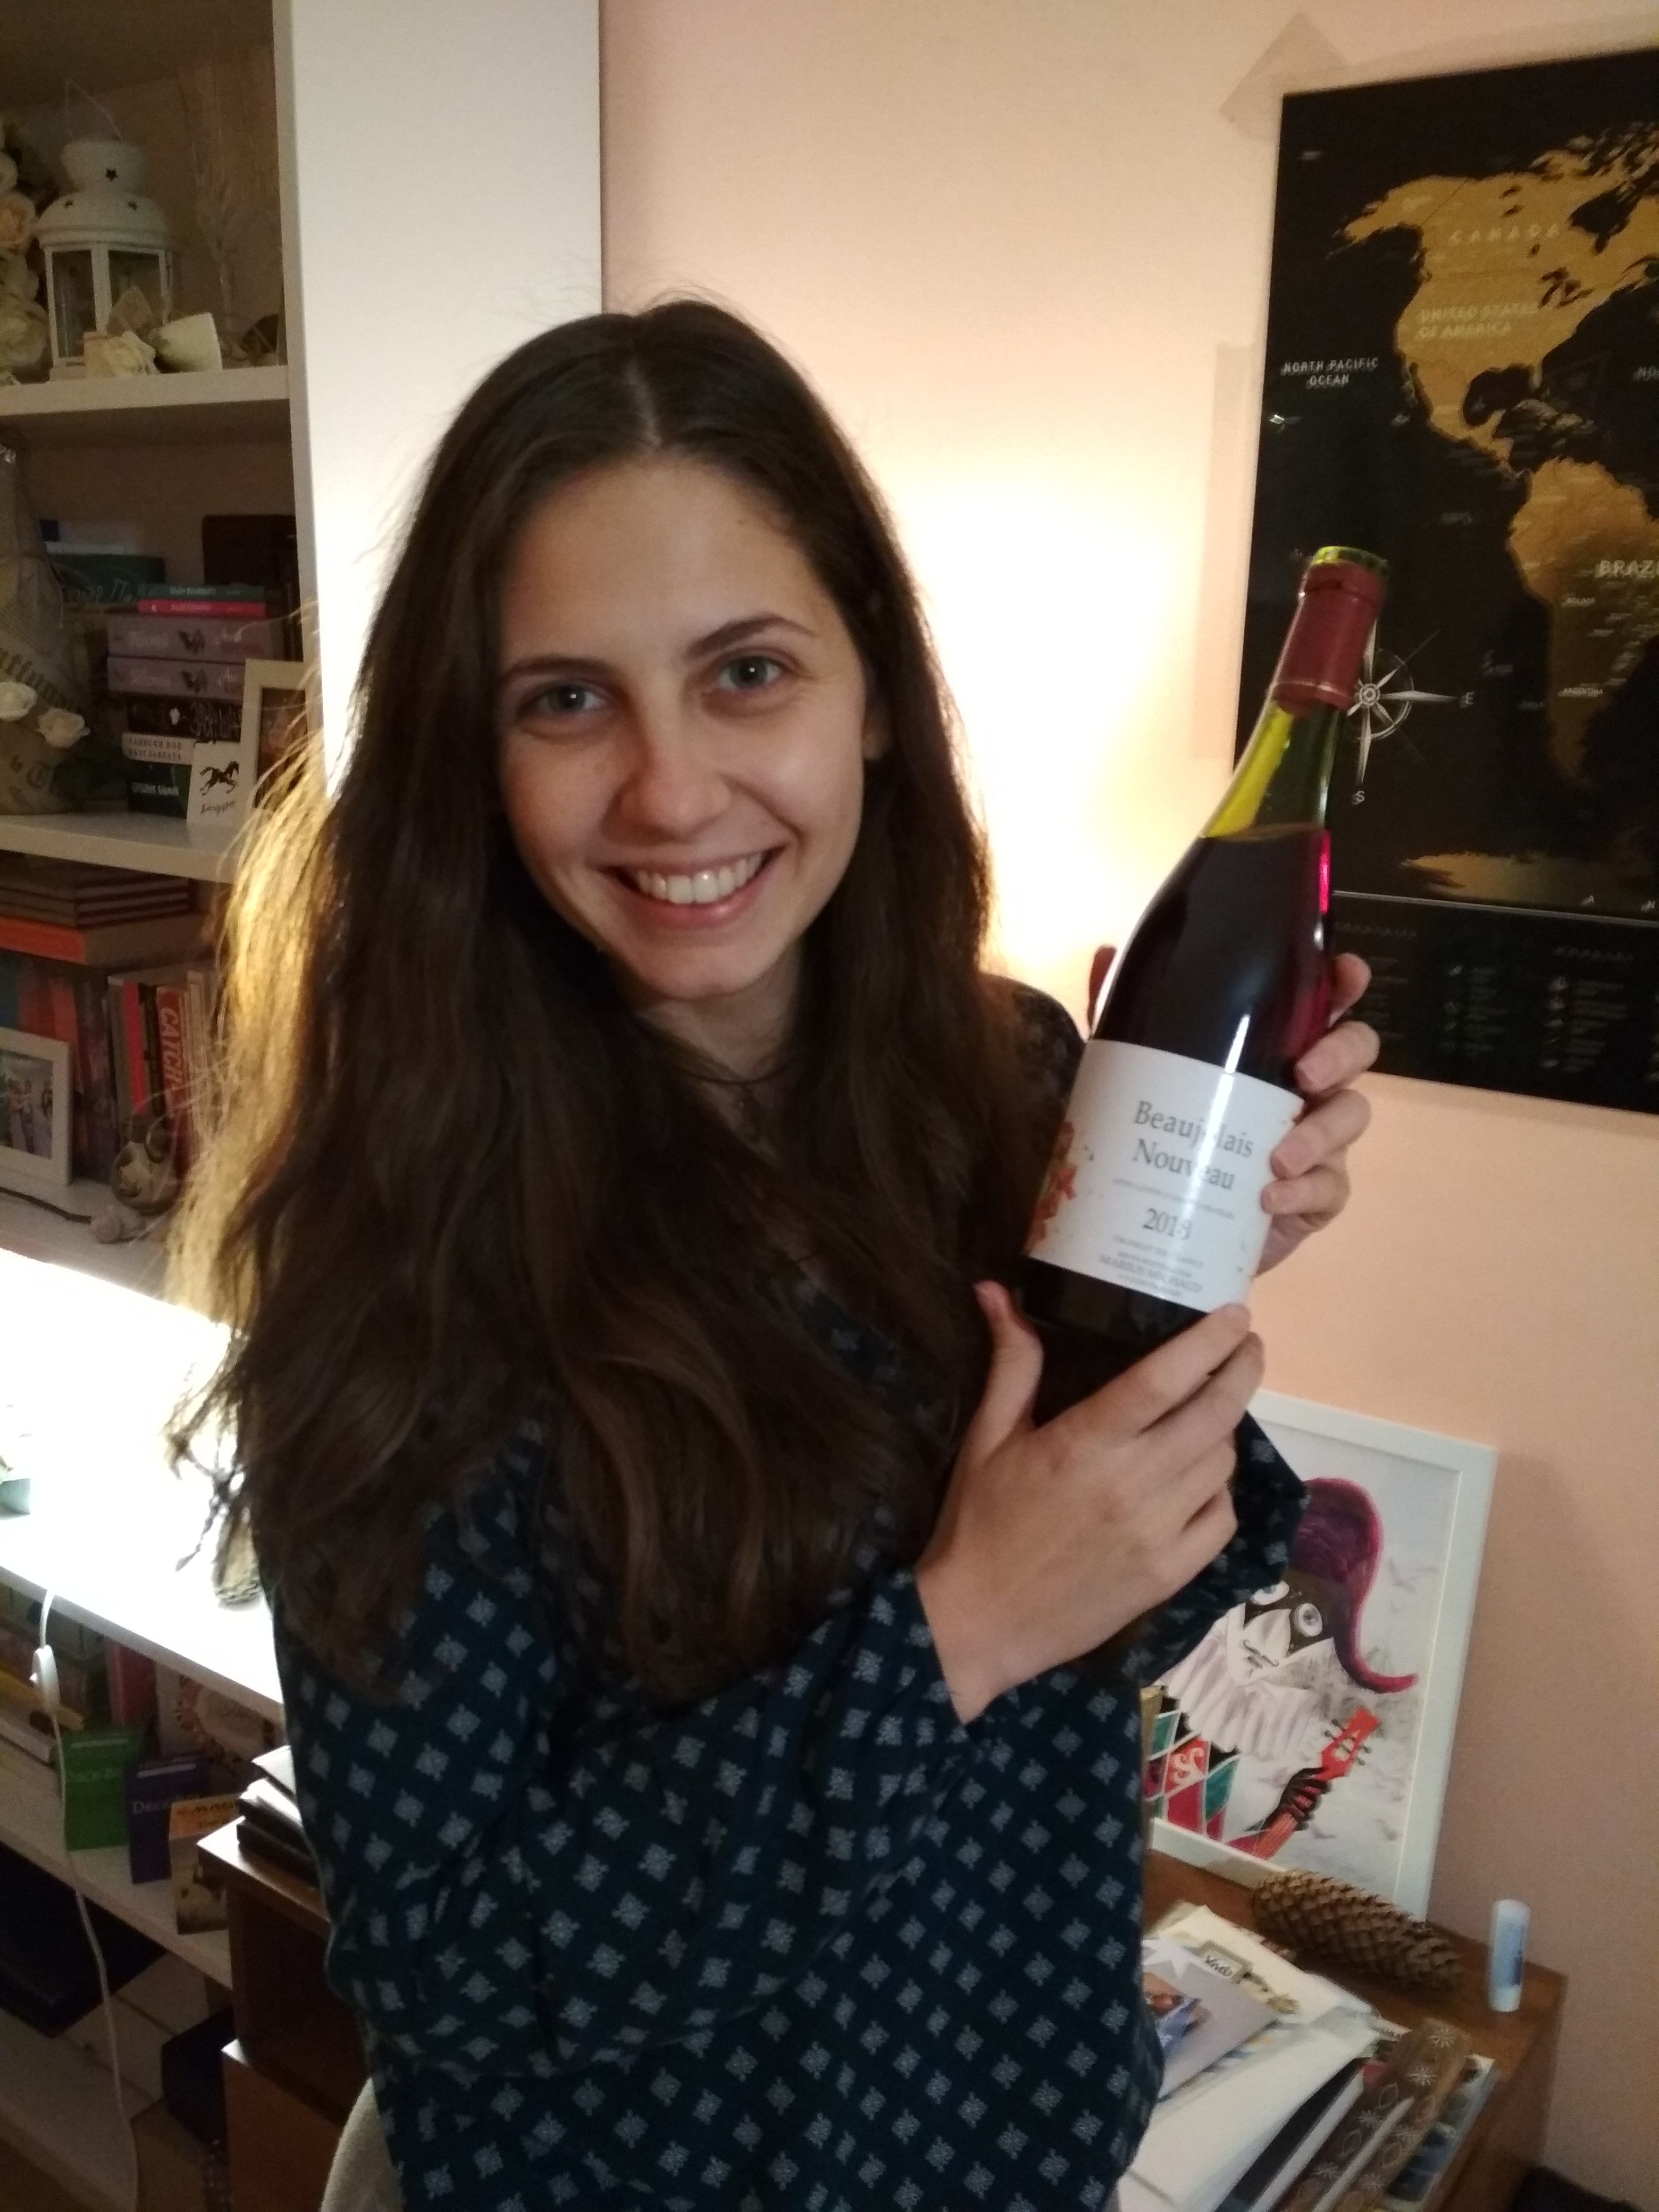 Caption: A photo of Google Moderator @DeniGu, holding a bottle of red Beaujolais Nouveau wine. (Local Guide Ivaylo Mihov)